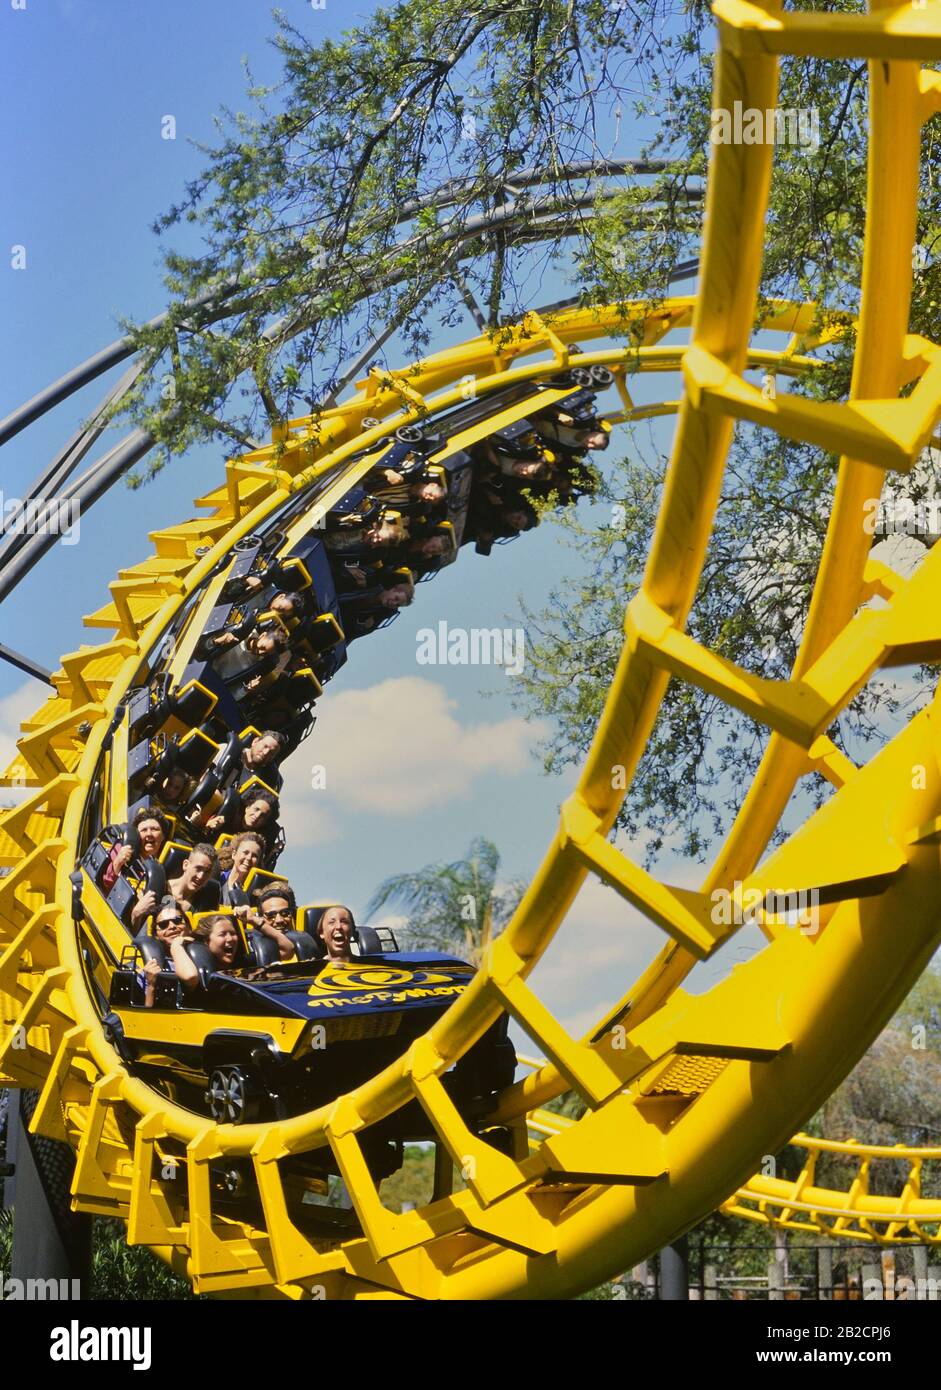 The Python Steel Roller Coaster Busch Gardens Tampa Bay Florida